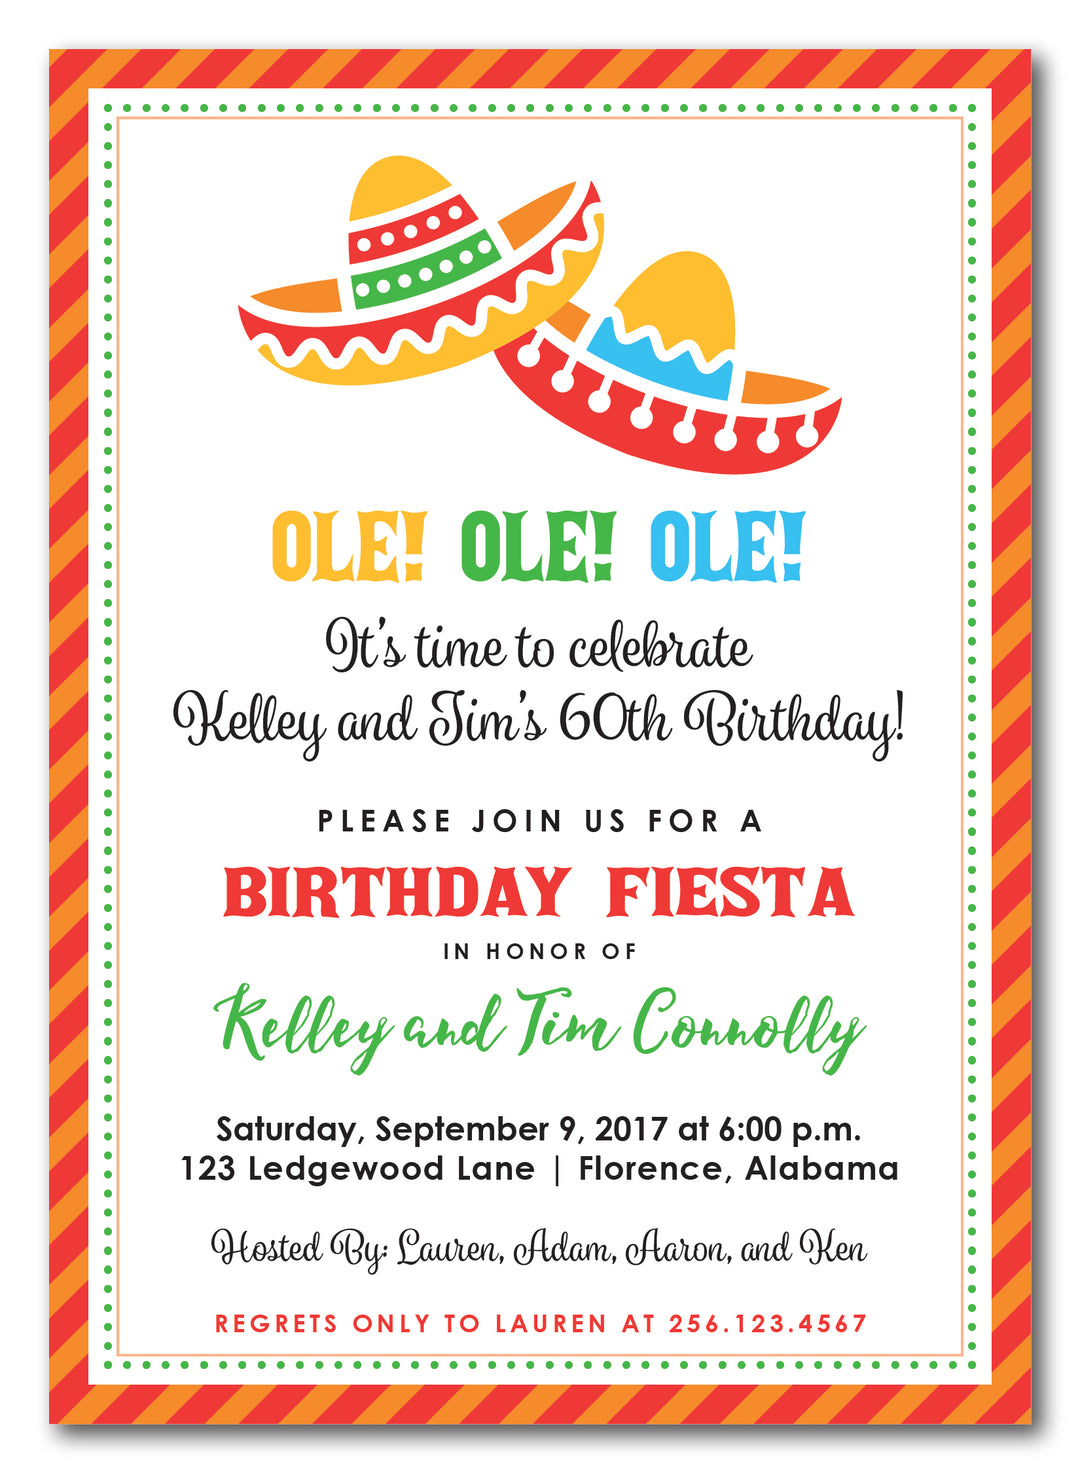 The Fiesta II Birthday Party Invitation